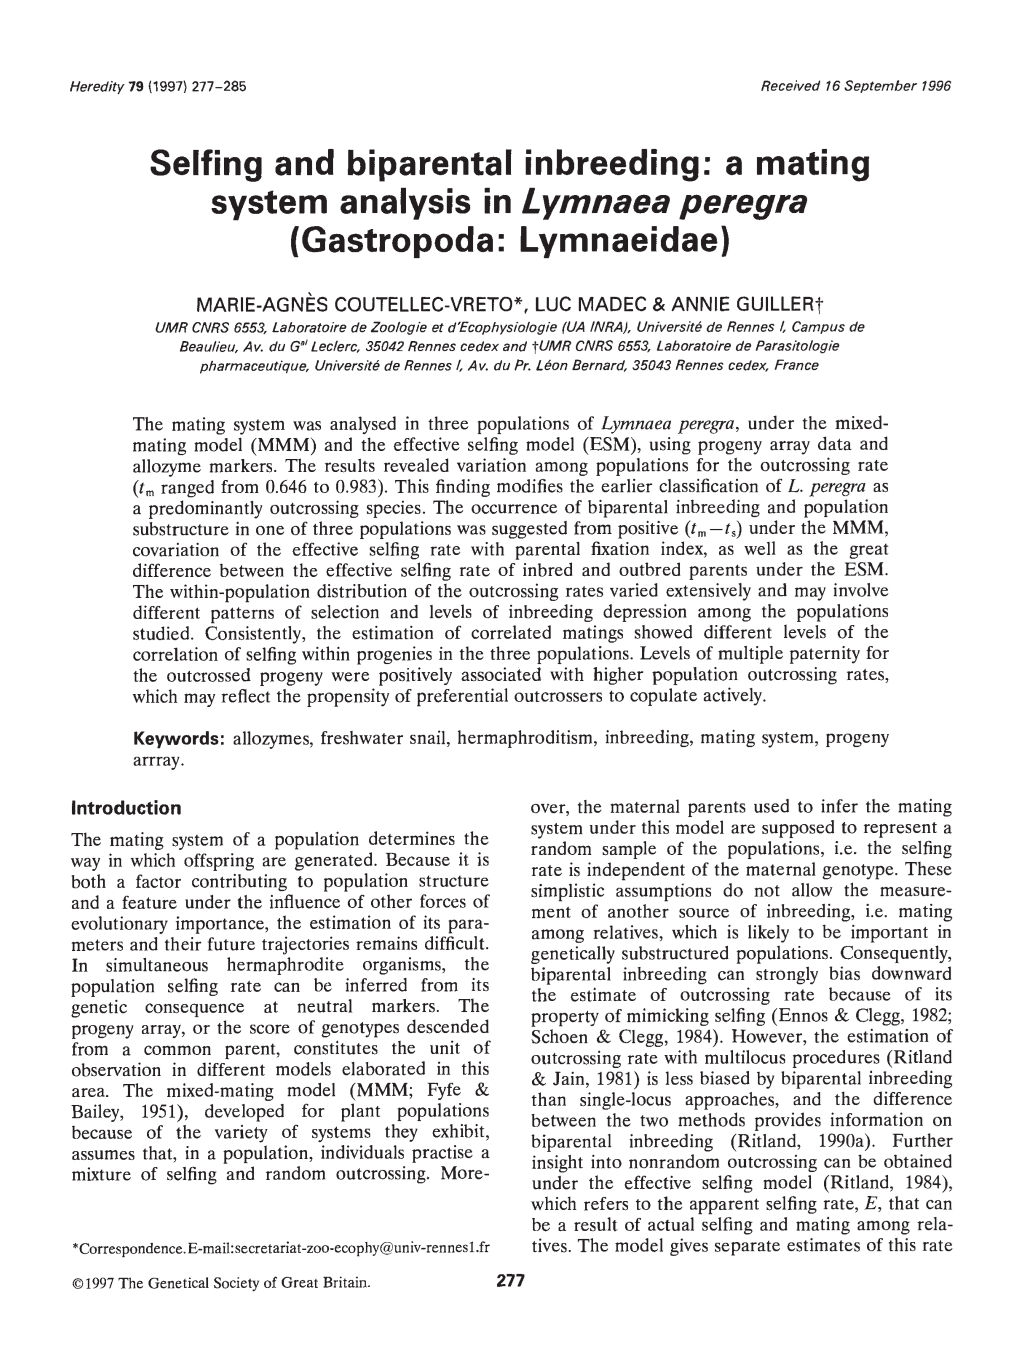 Selfing and Biparental Inbreeding: a Mating System Analysis in Lymnaea Peregra (Gastropoda: Lymnaeidae)